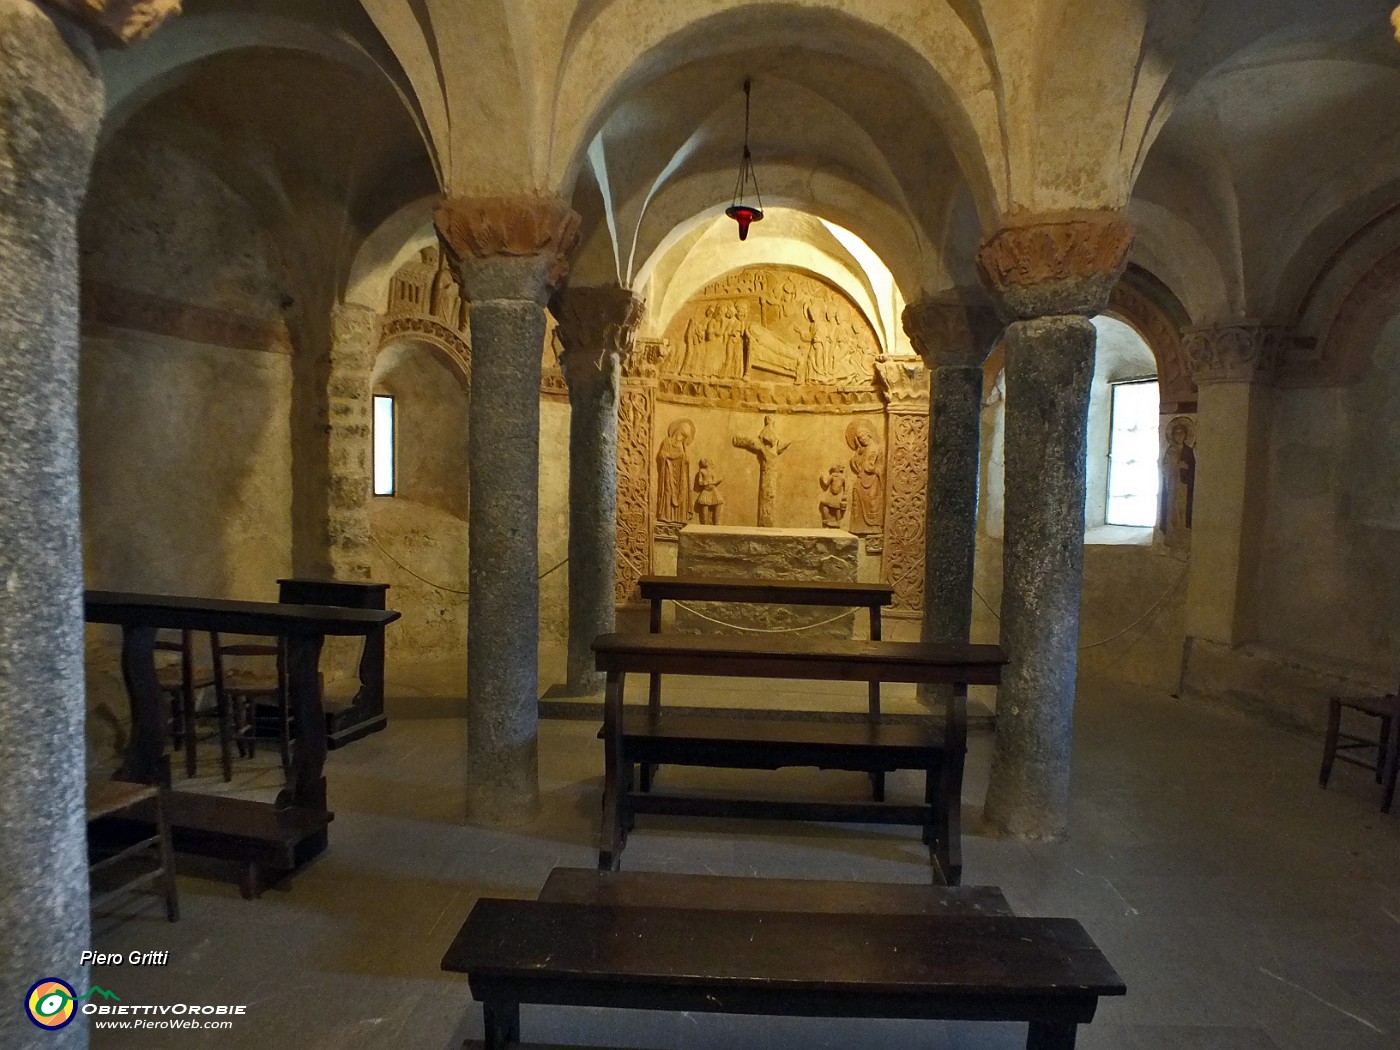 32 La cripta  sotterranea antichissima.JPG